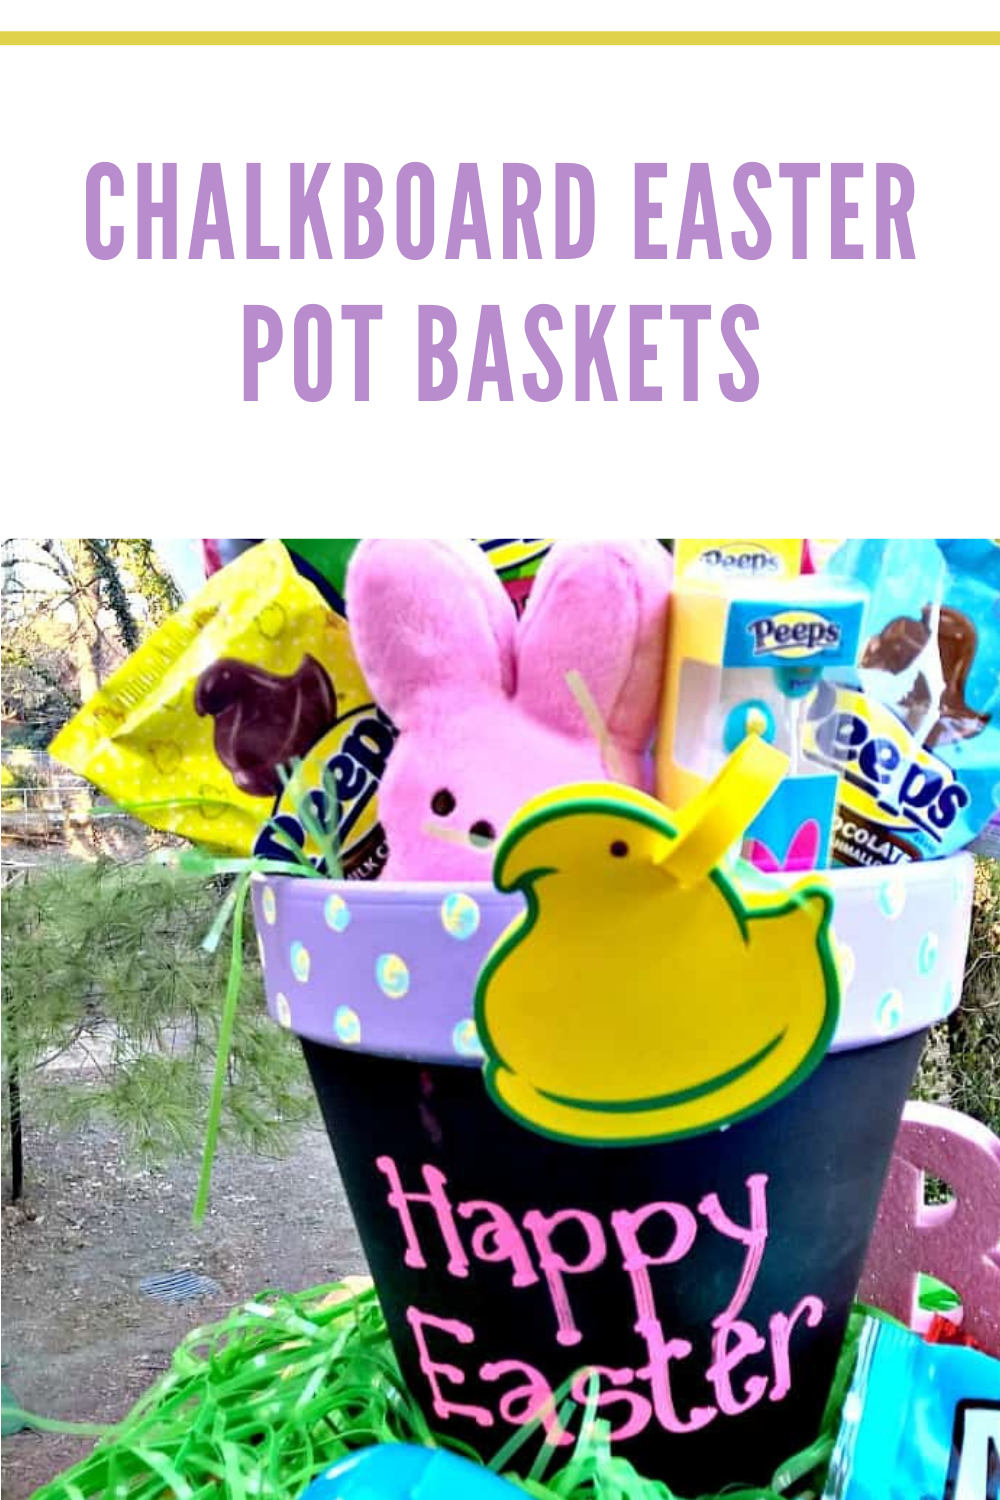 ChalkBoard Easter Pot Baskets